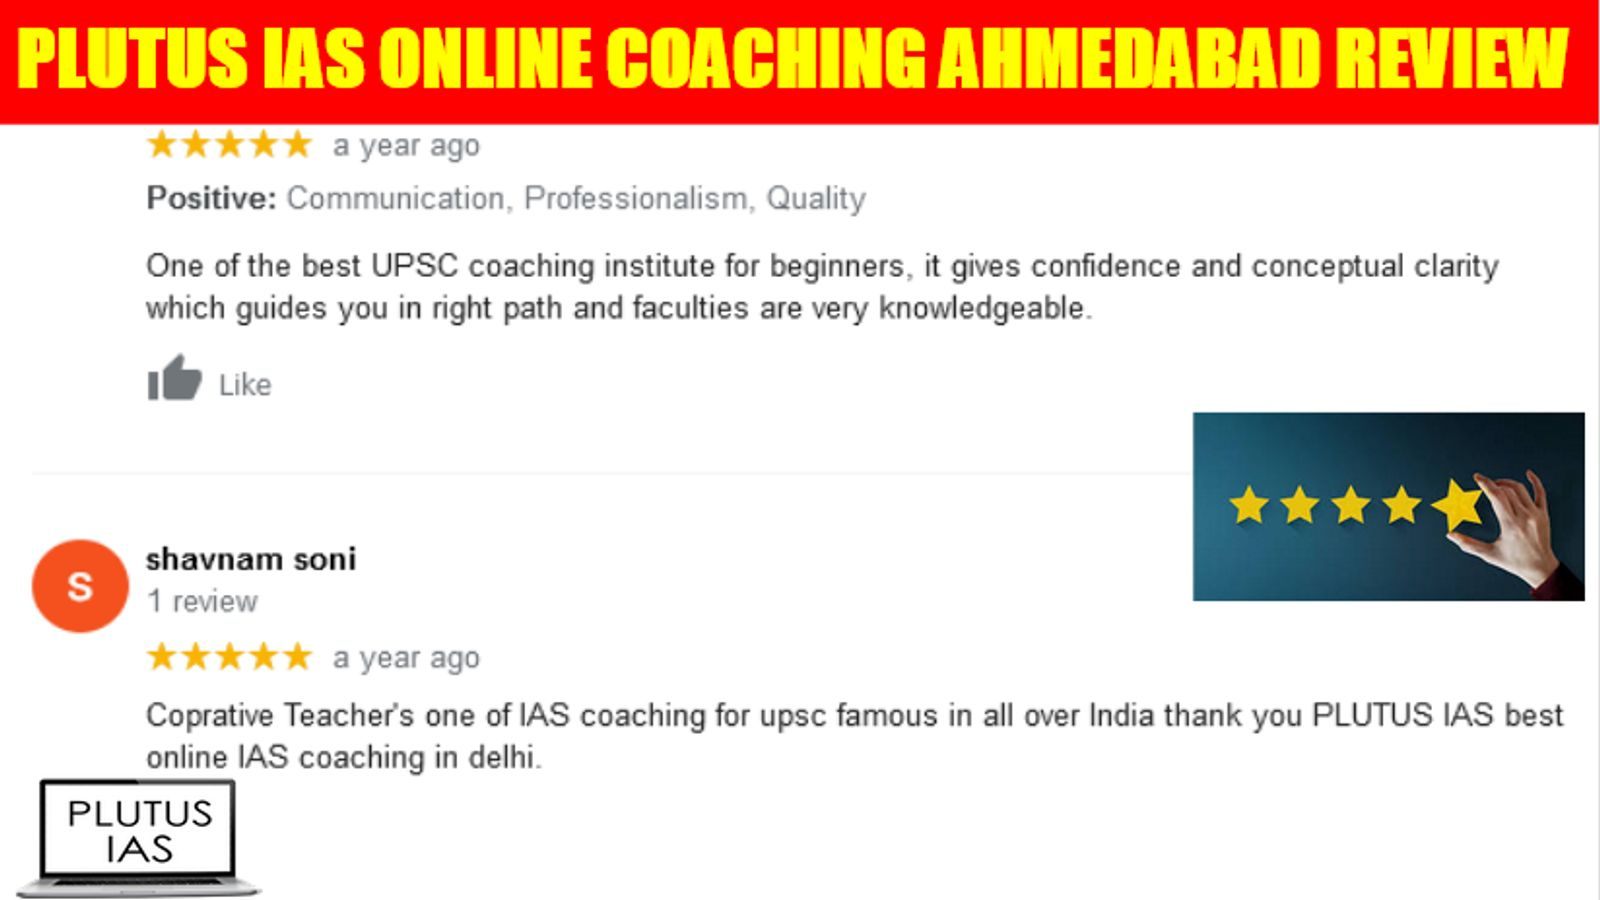 Plutus IAS Online Coaching Ahmedabad Review